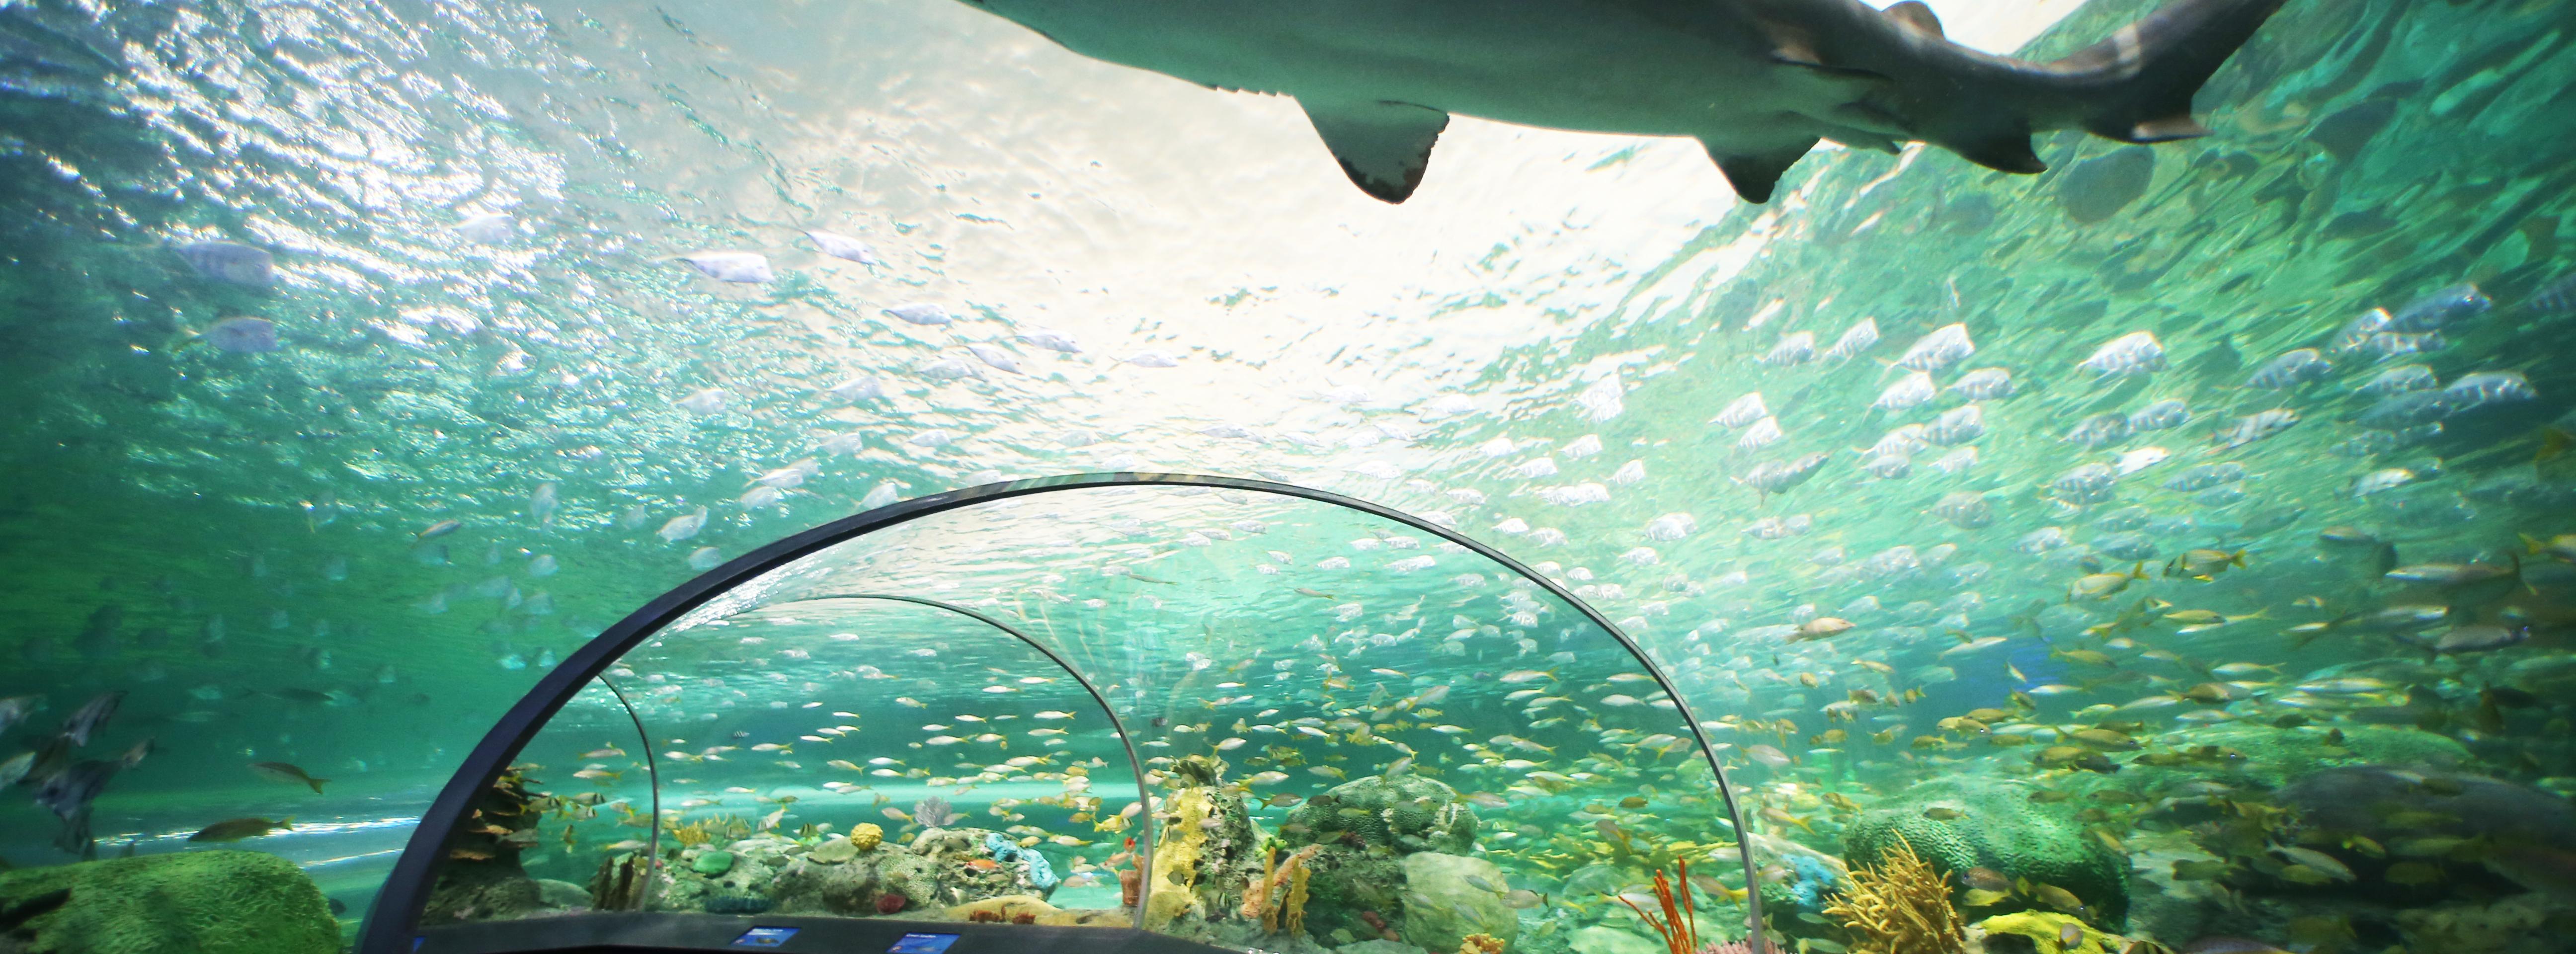 Fast-Track Tickets to Ripley's Aquarium of Canada – Toronto